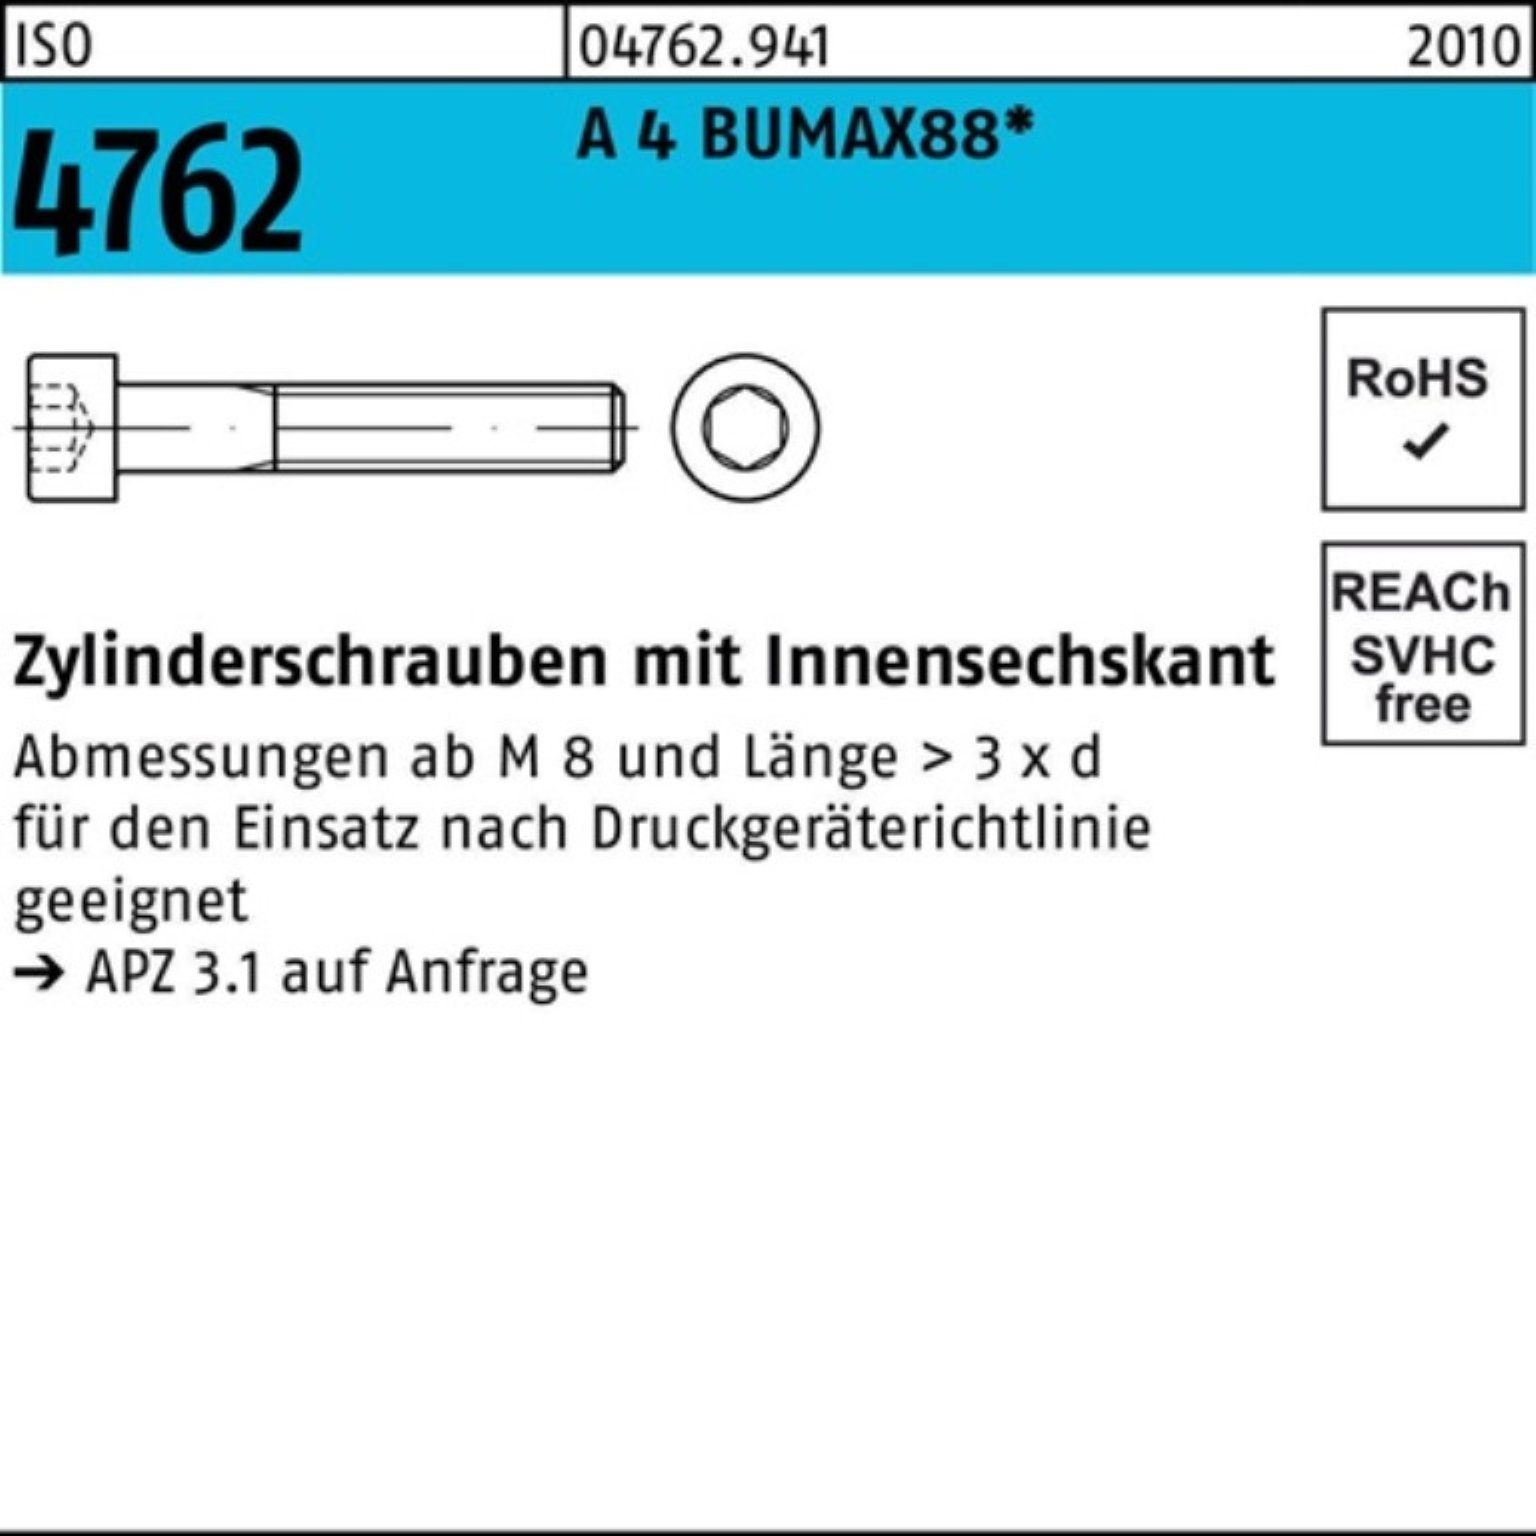 50 BUMAX88 100 M6x Pack 100er ISO Zylinderschraube Innen-6kt Zylinderschraube A Bufab 4 4762